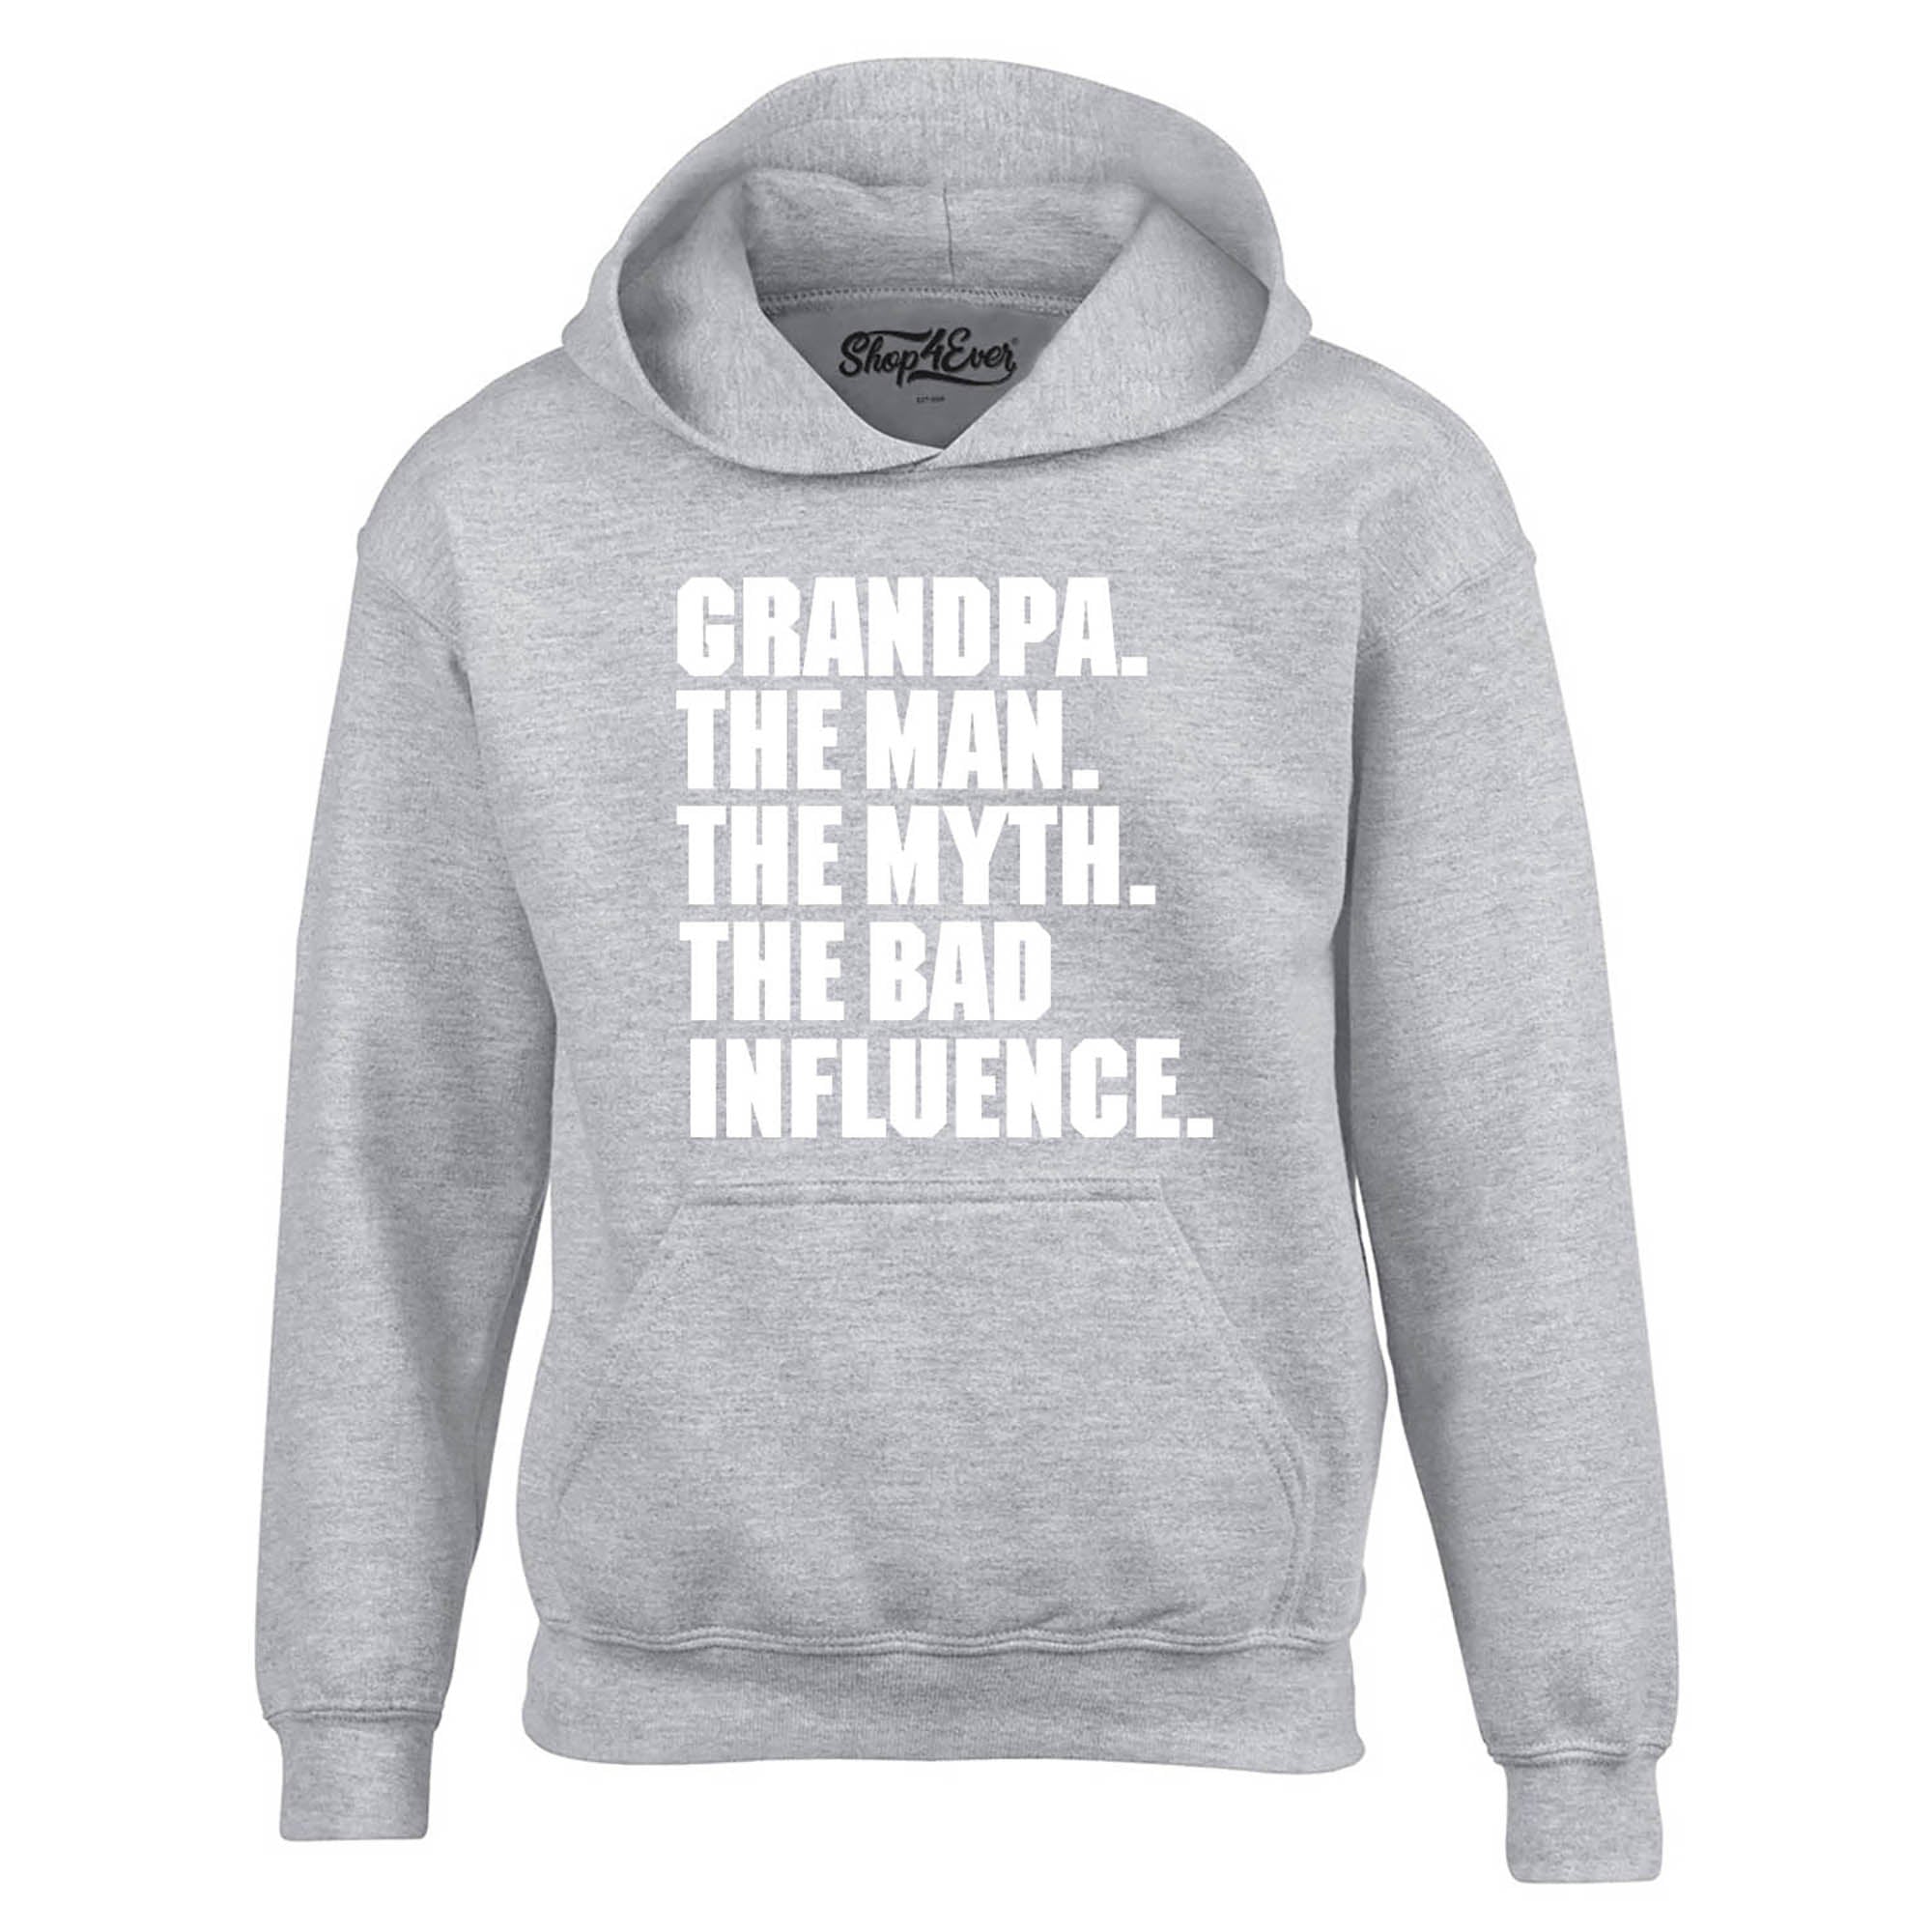 Grandpa The Man The Myth The Bad Influence Hoodie Sweatshirts